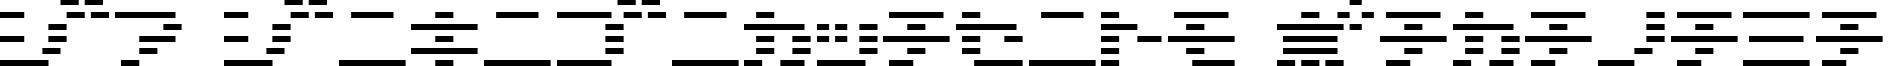 D3 DigiBitMapism Katakana font - d3digibitmapismk.ttf